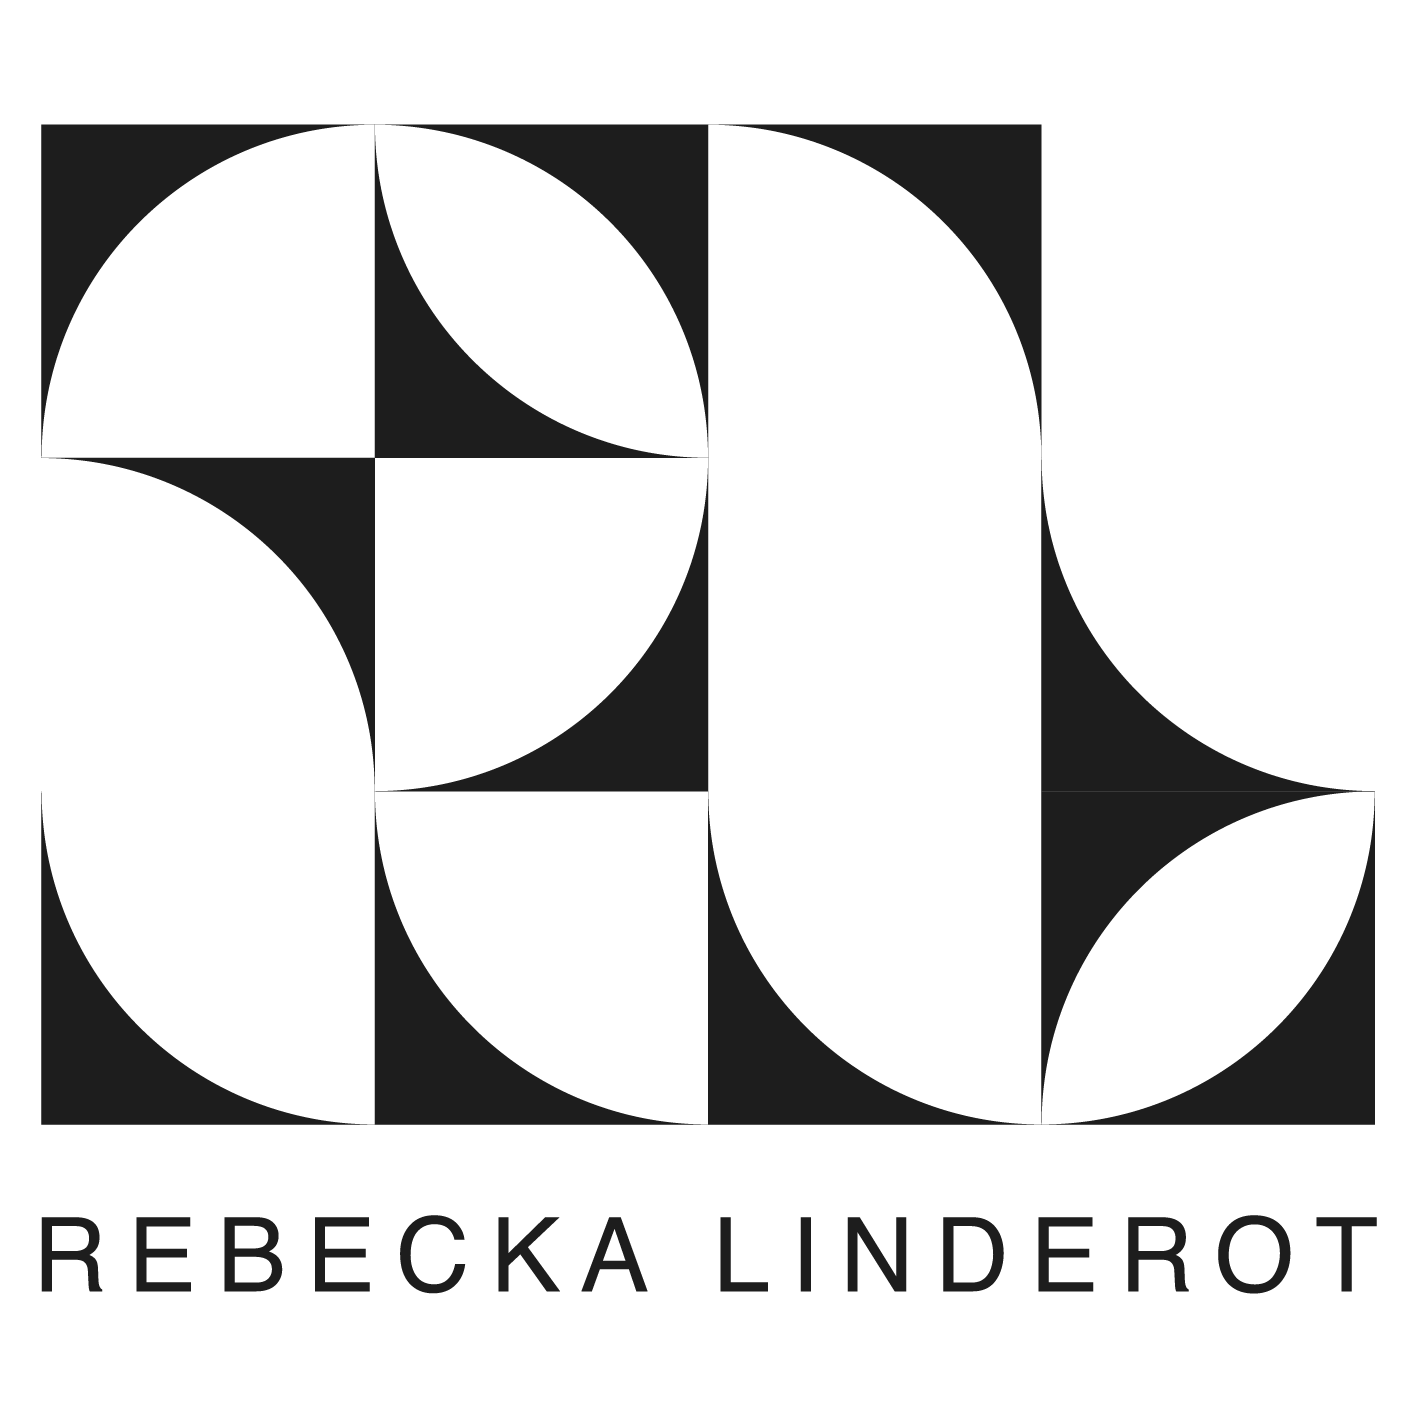 Rebecka Linderot